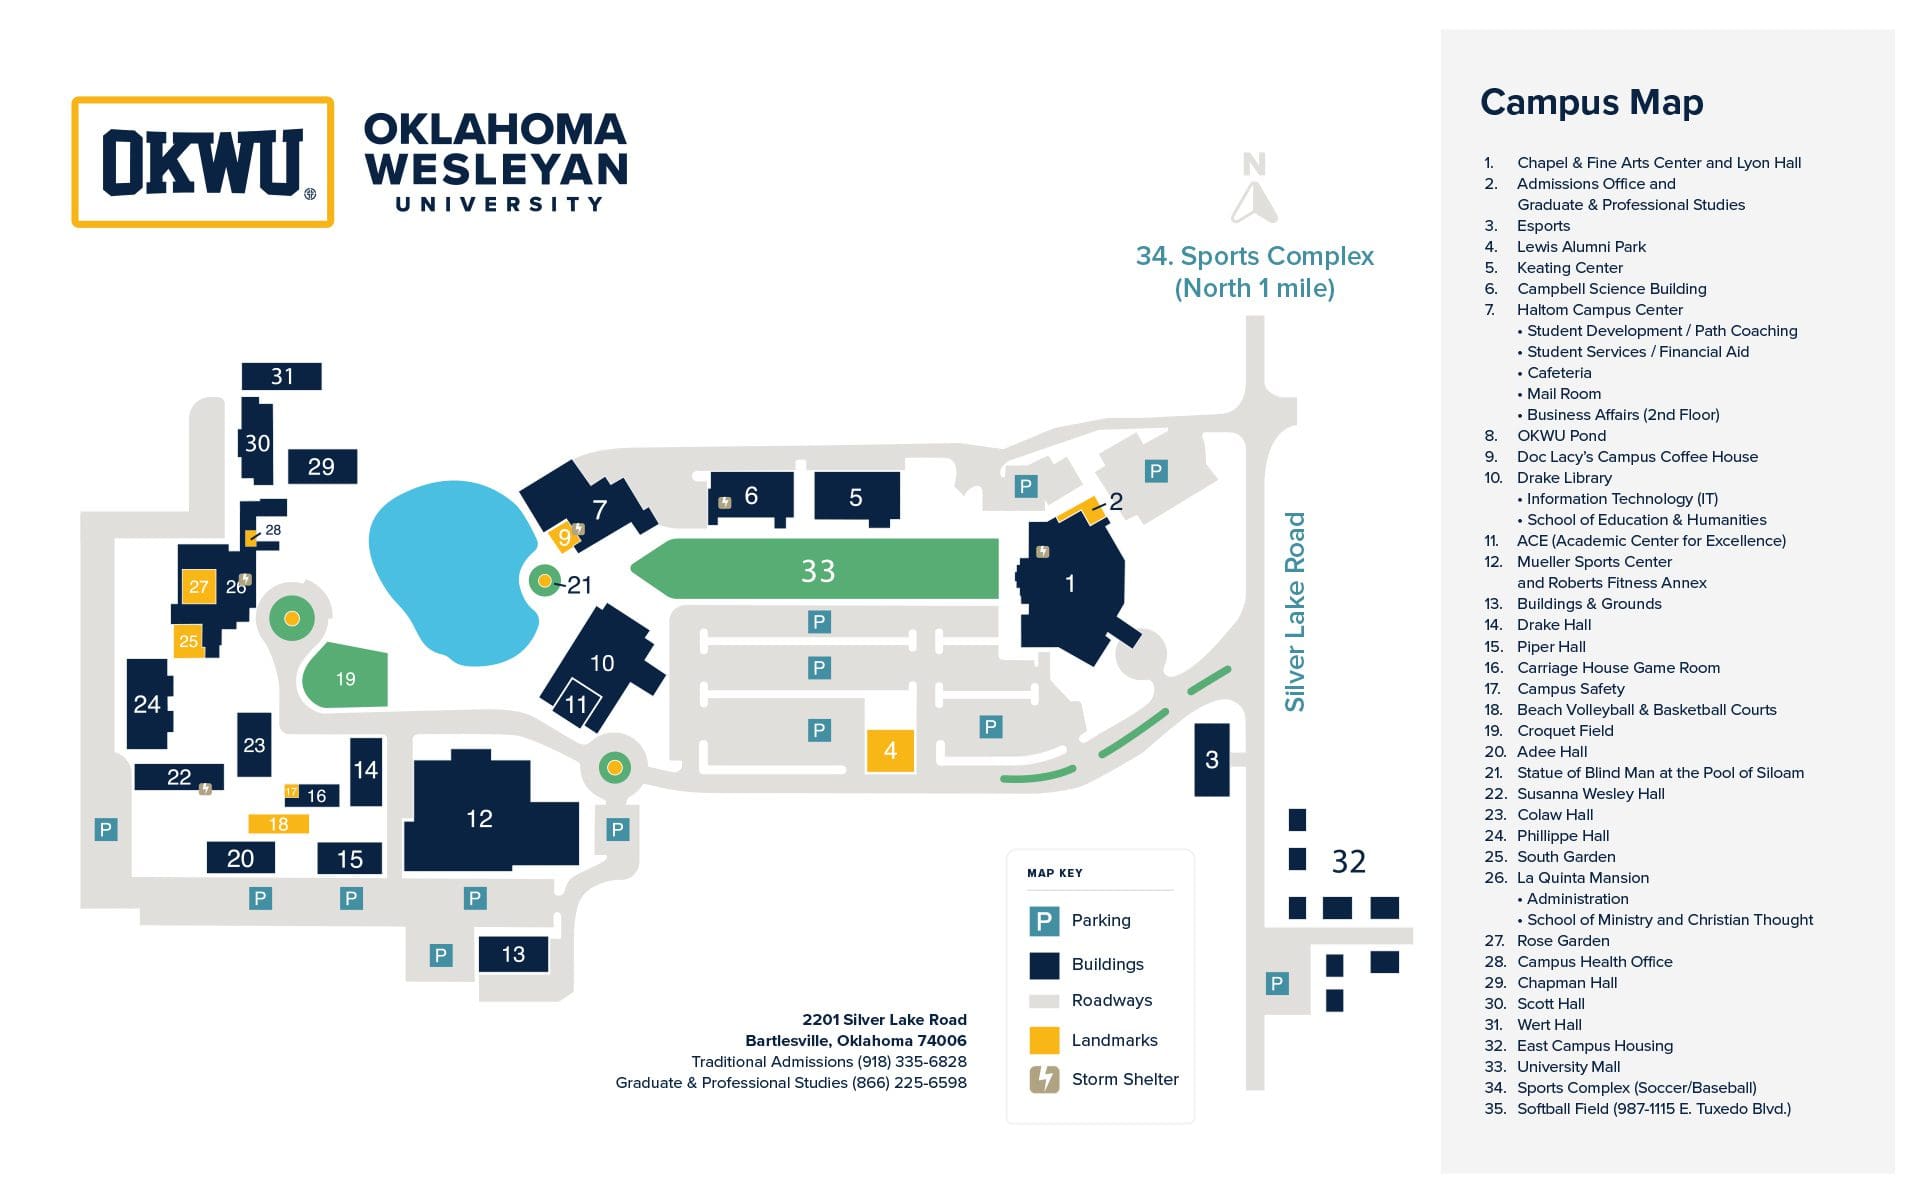 OKWU Campus Map